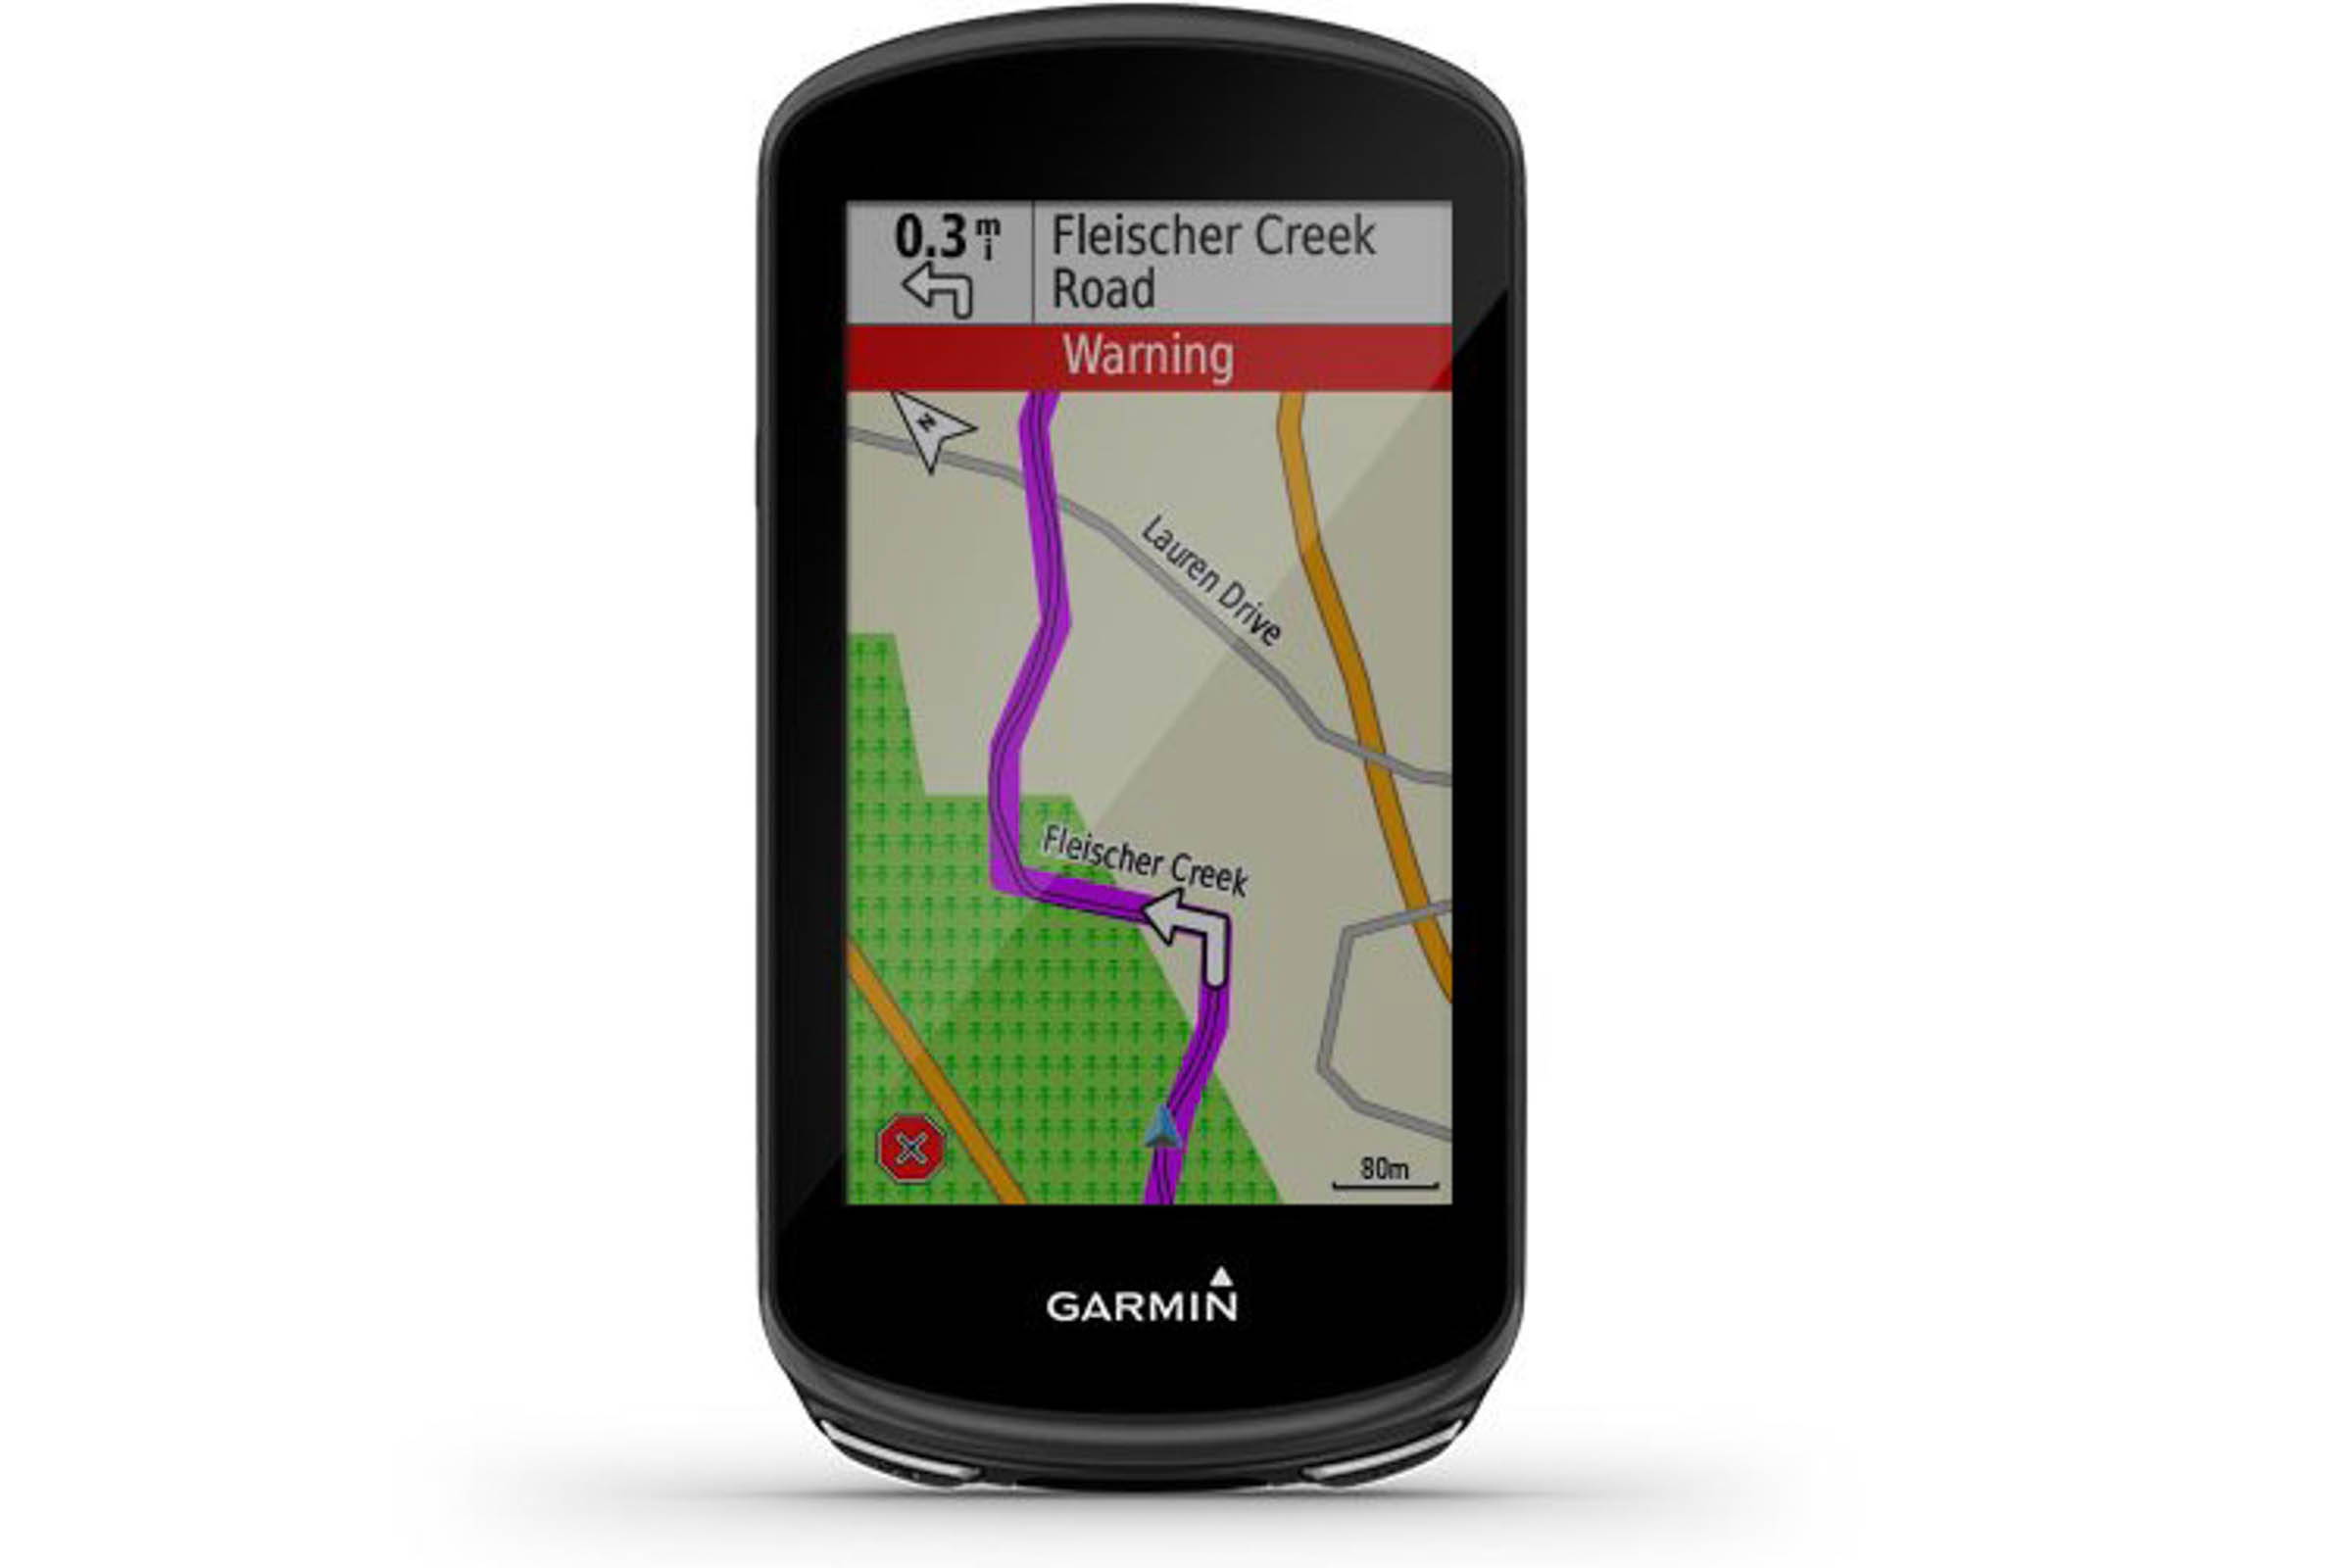 Coque Silicone orange pour GPS Garmin Edge 1030 / Edge 1030 Plus